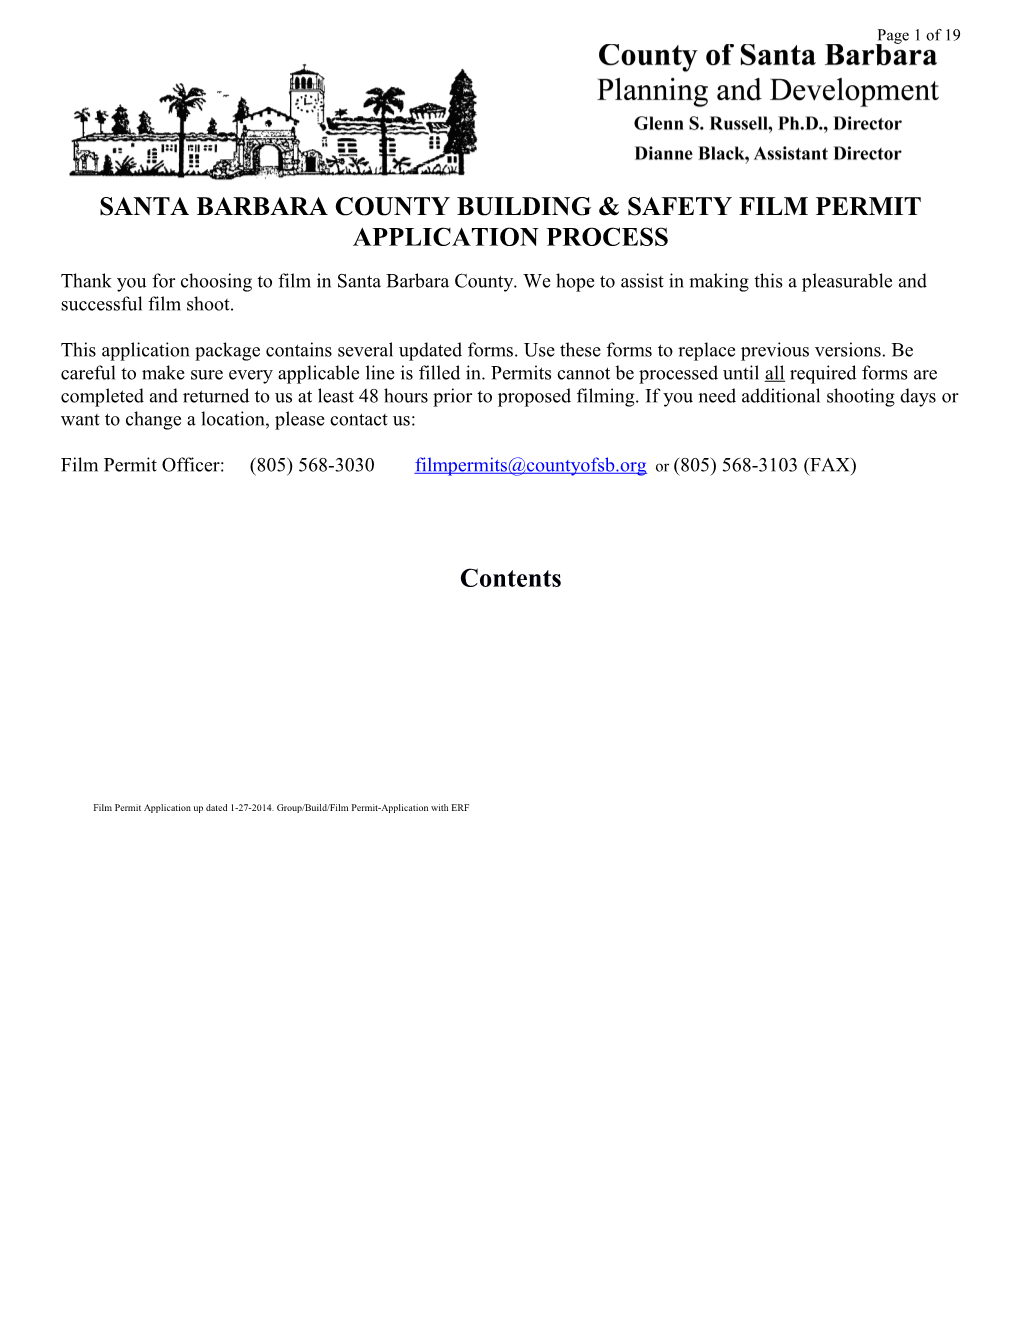 Santa Barbara County Building & Safety Film Permitapplication Process